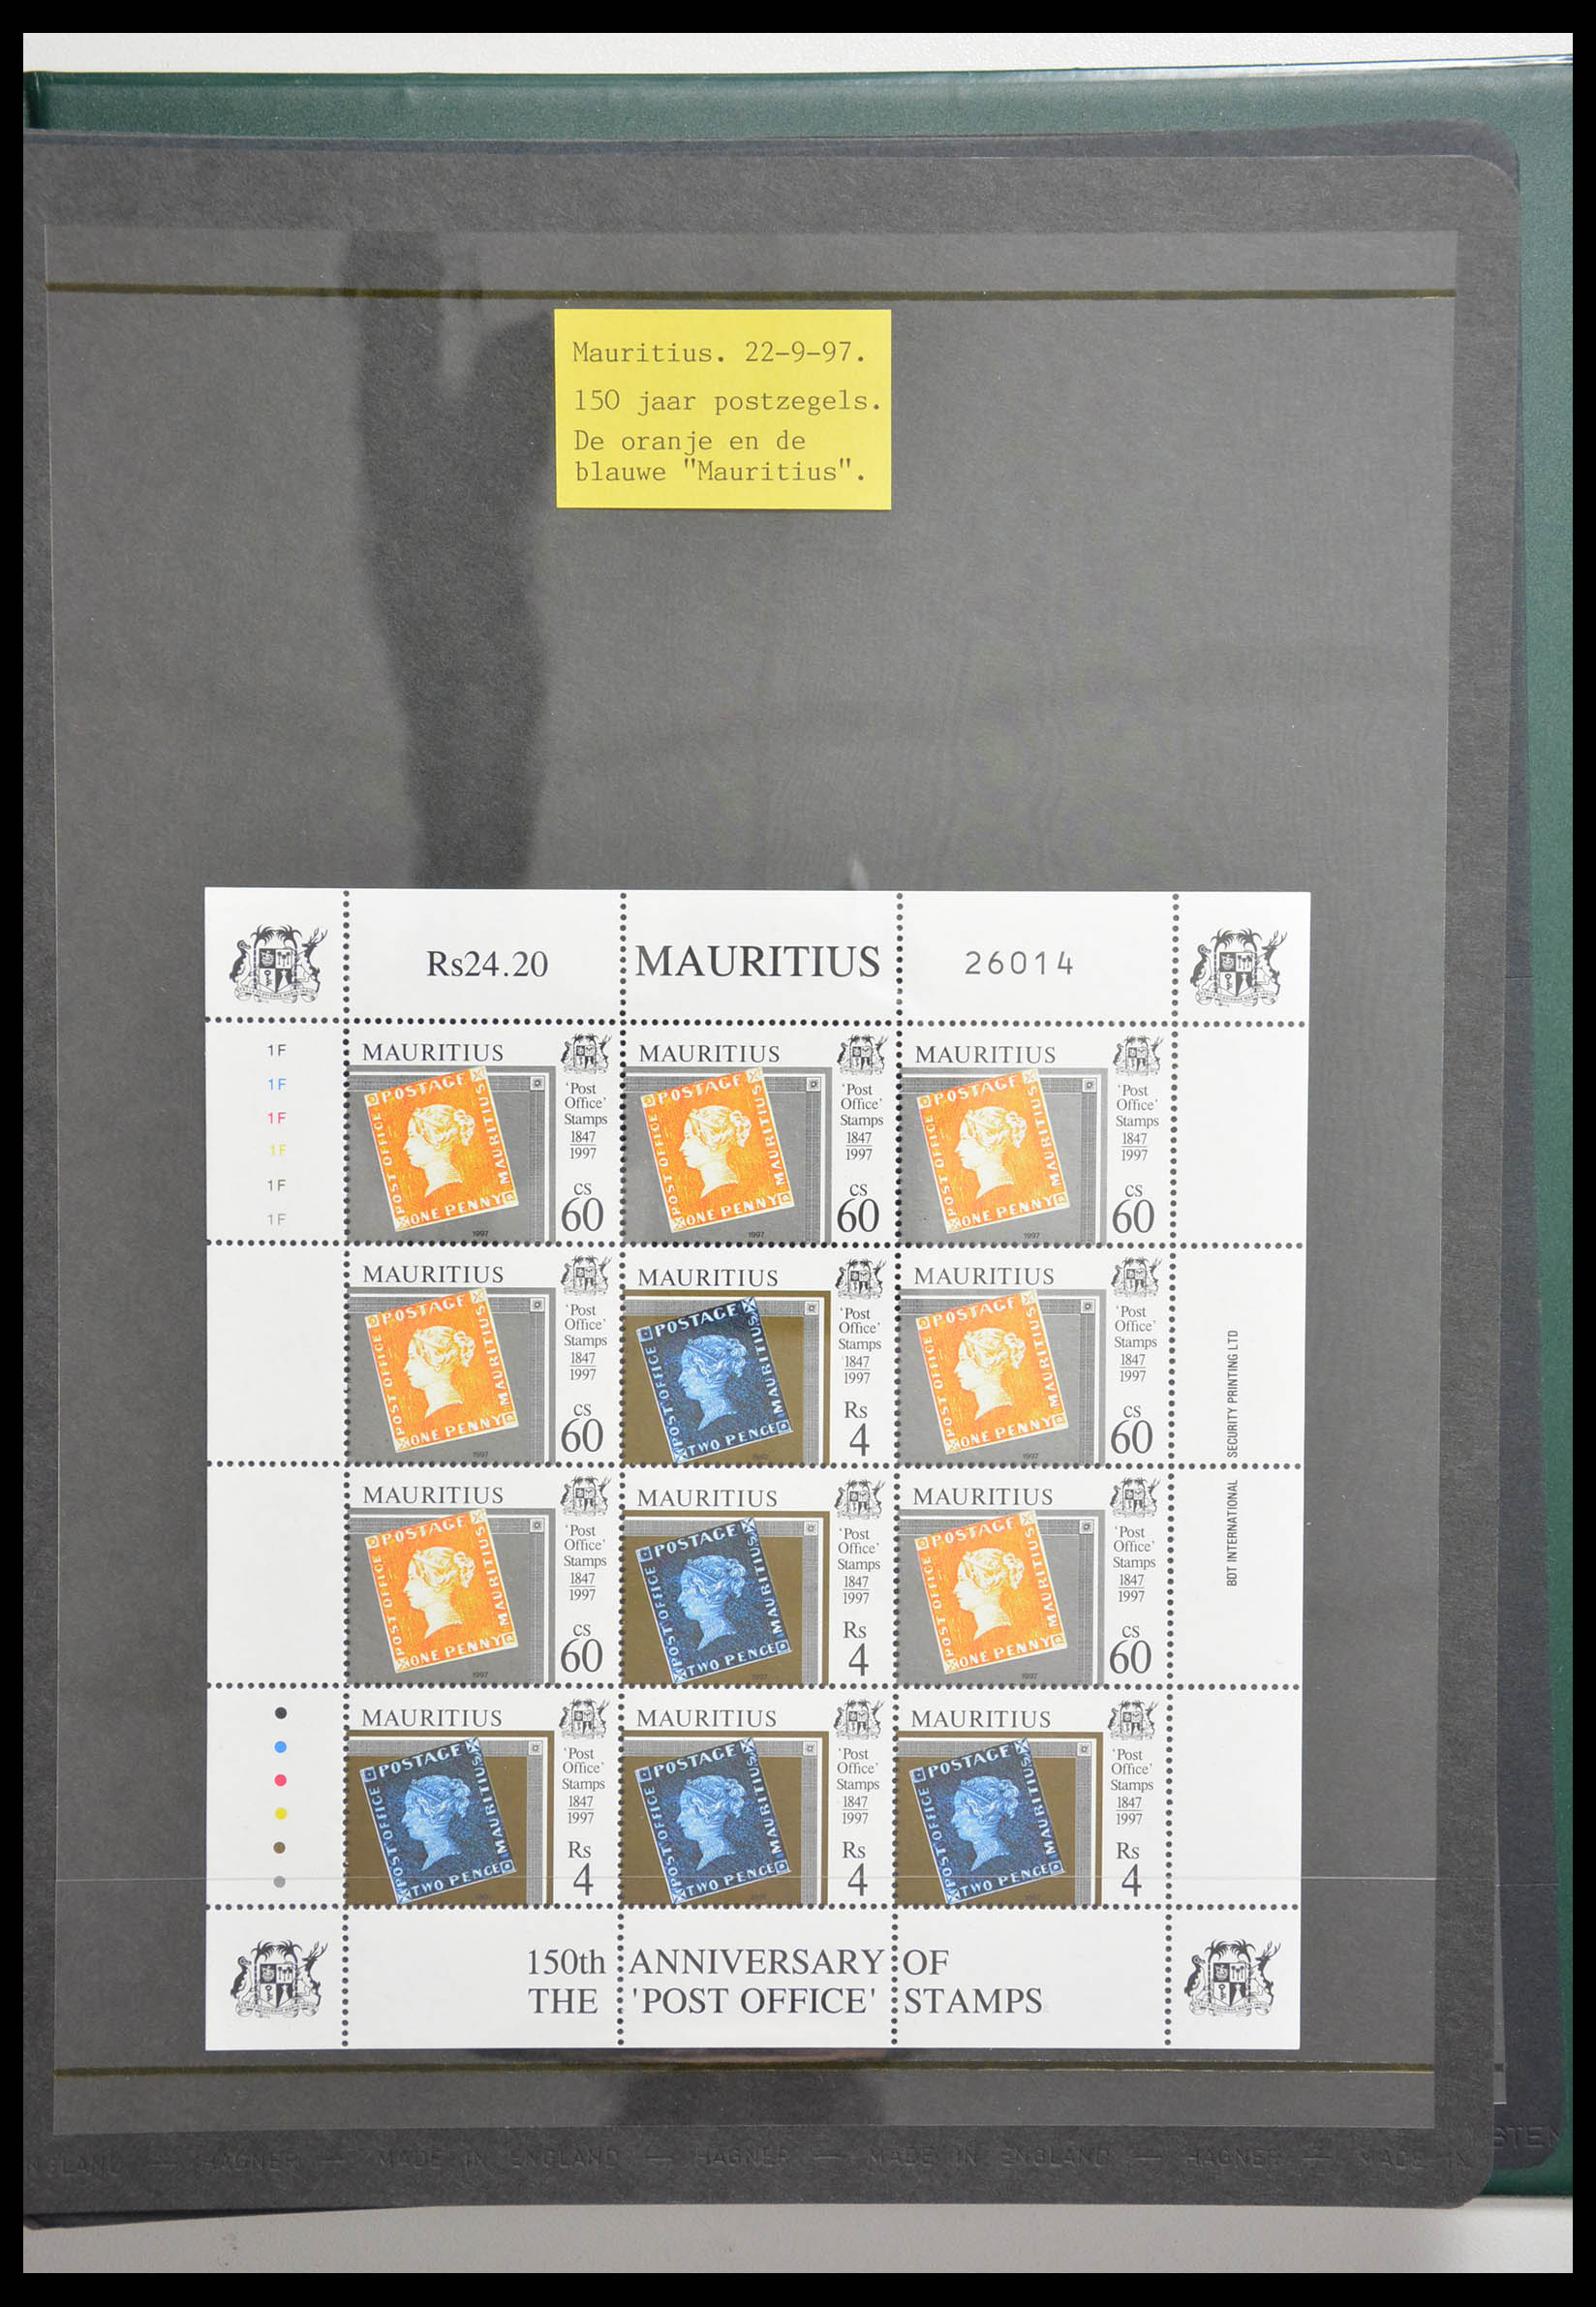 28337 048 - 28337 Postzegel op postzegel 1840-2001.